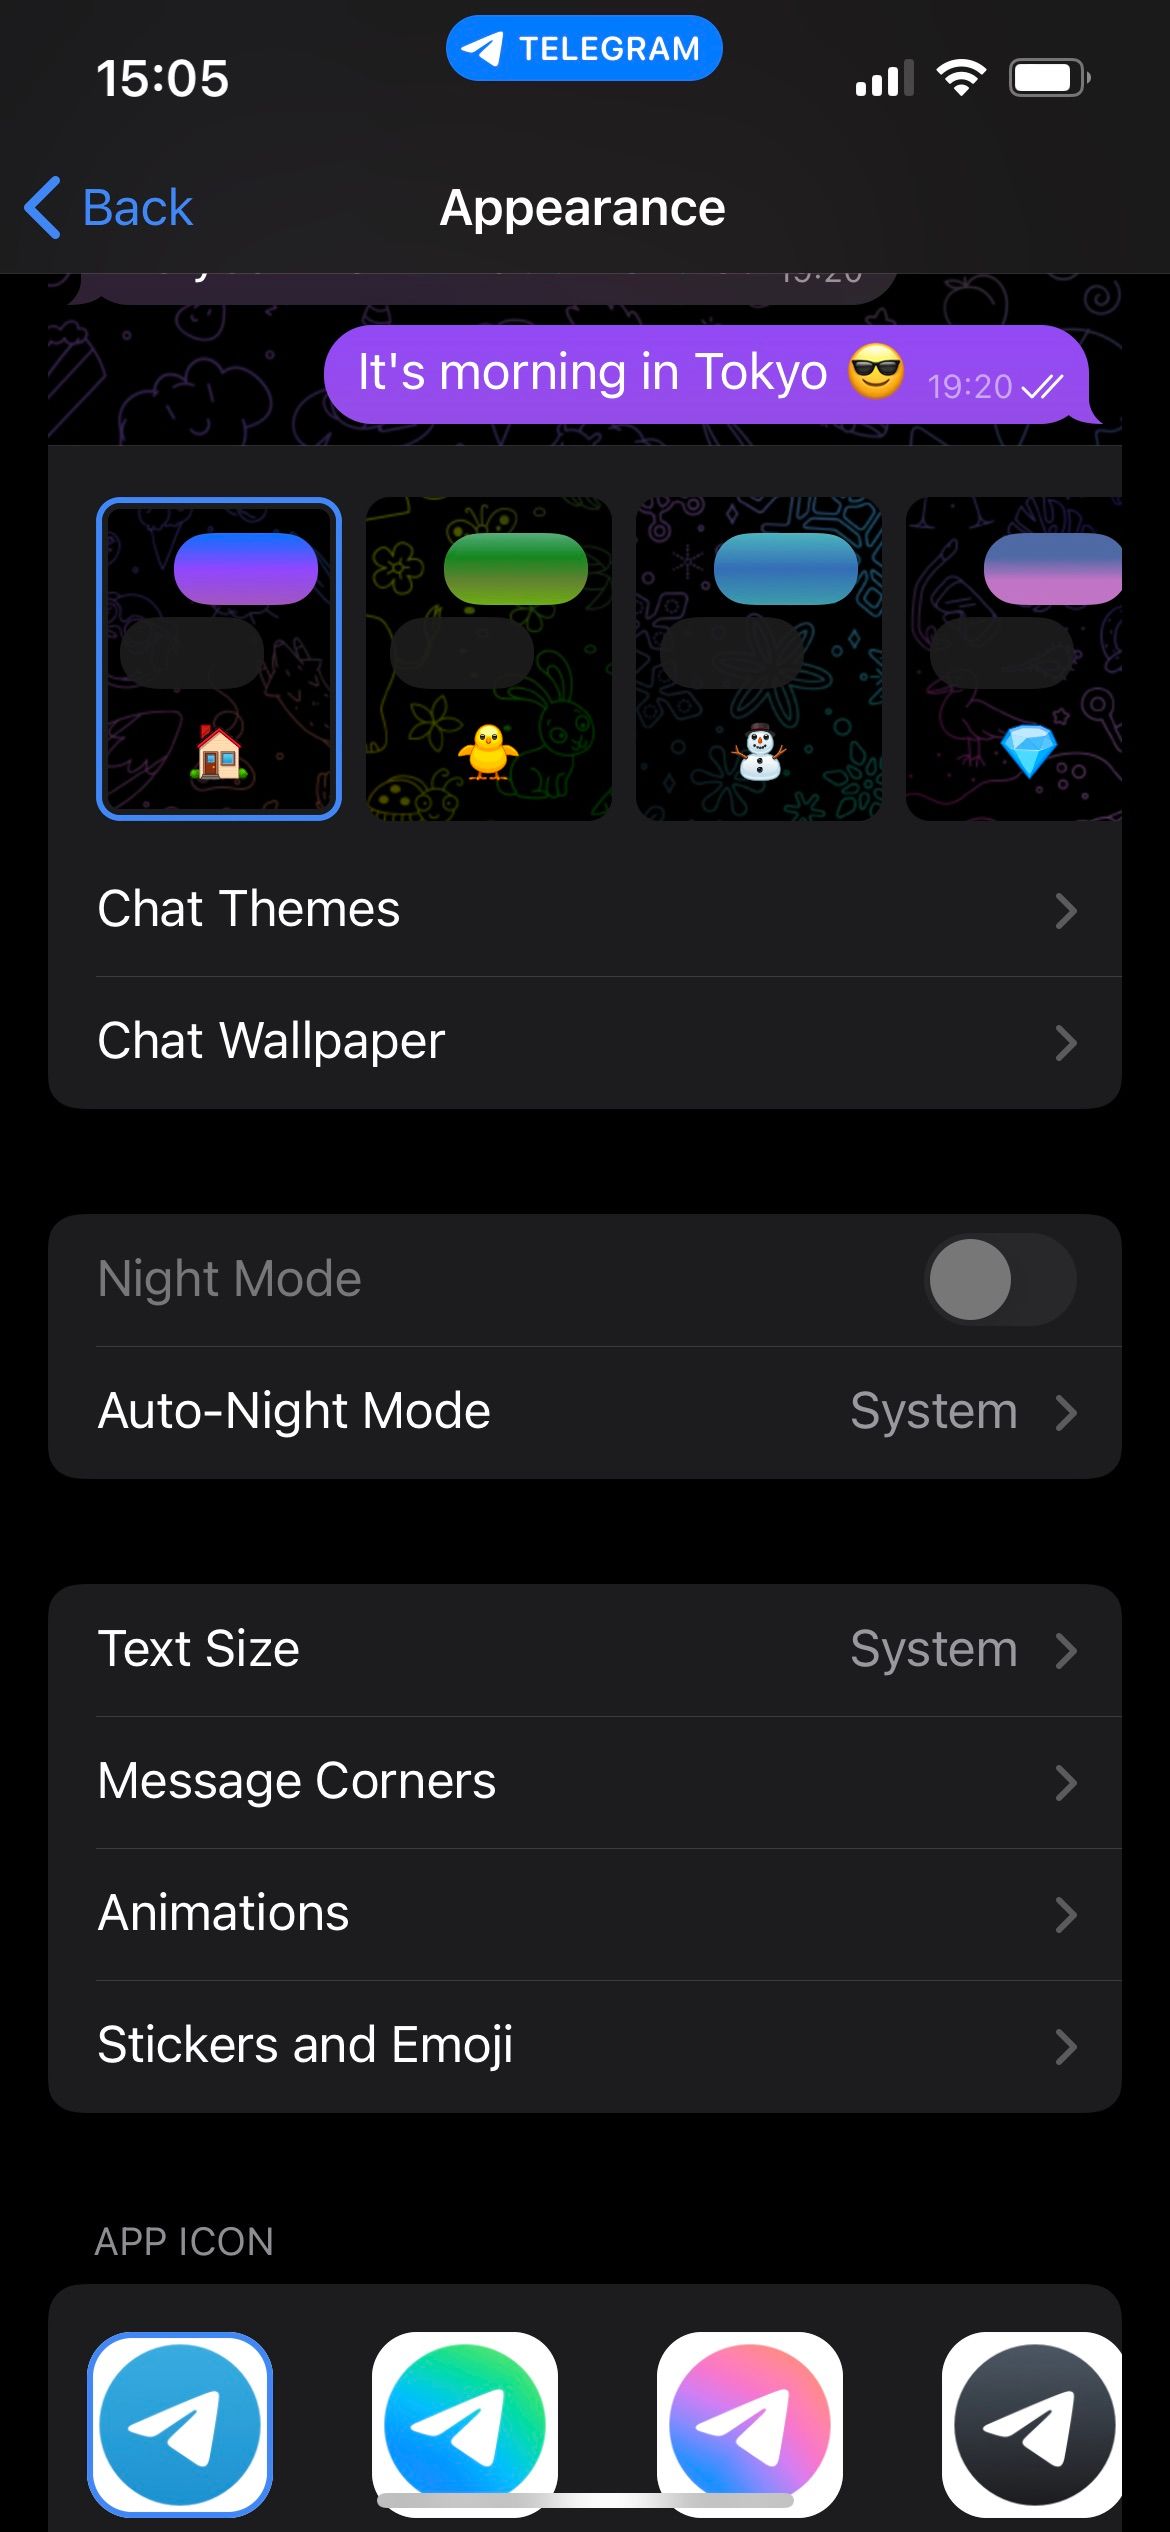 Appearance panel in Telegram's settings